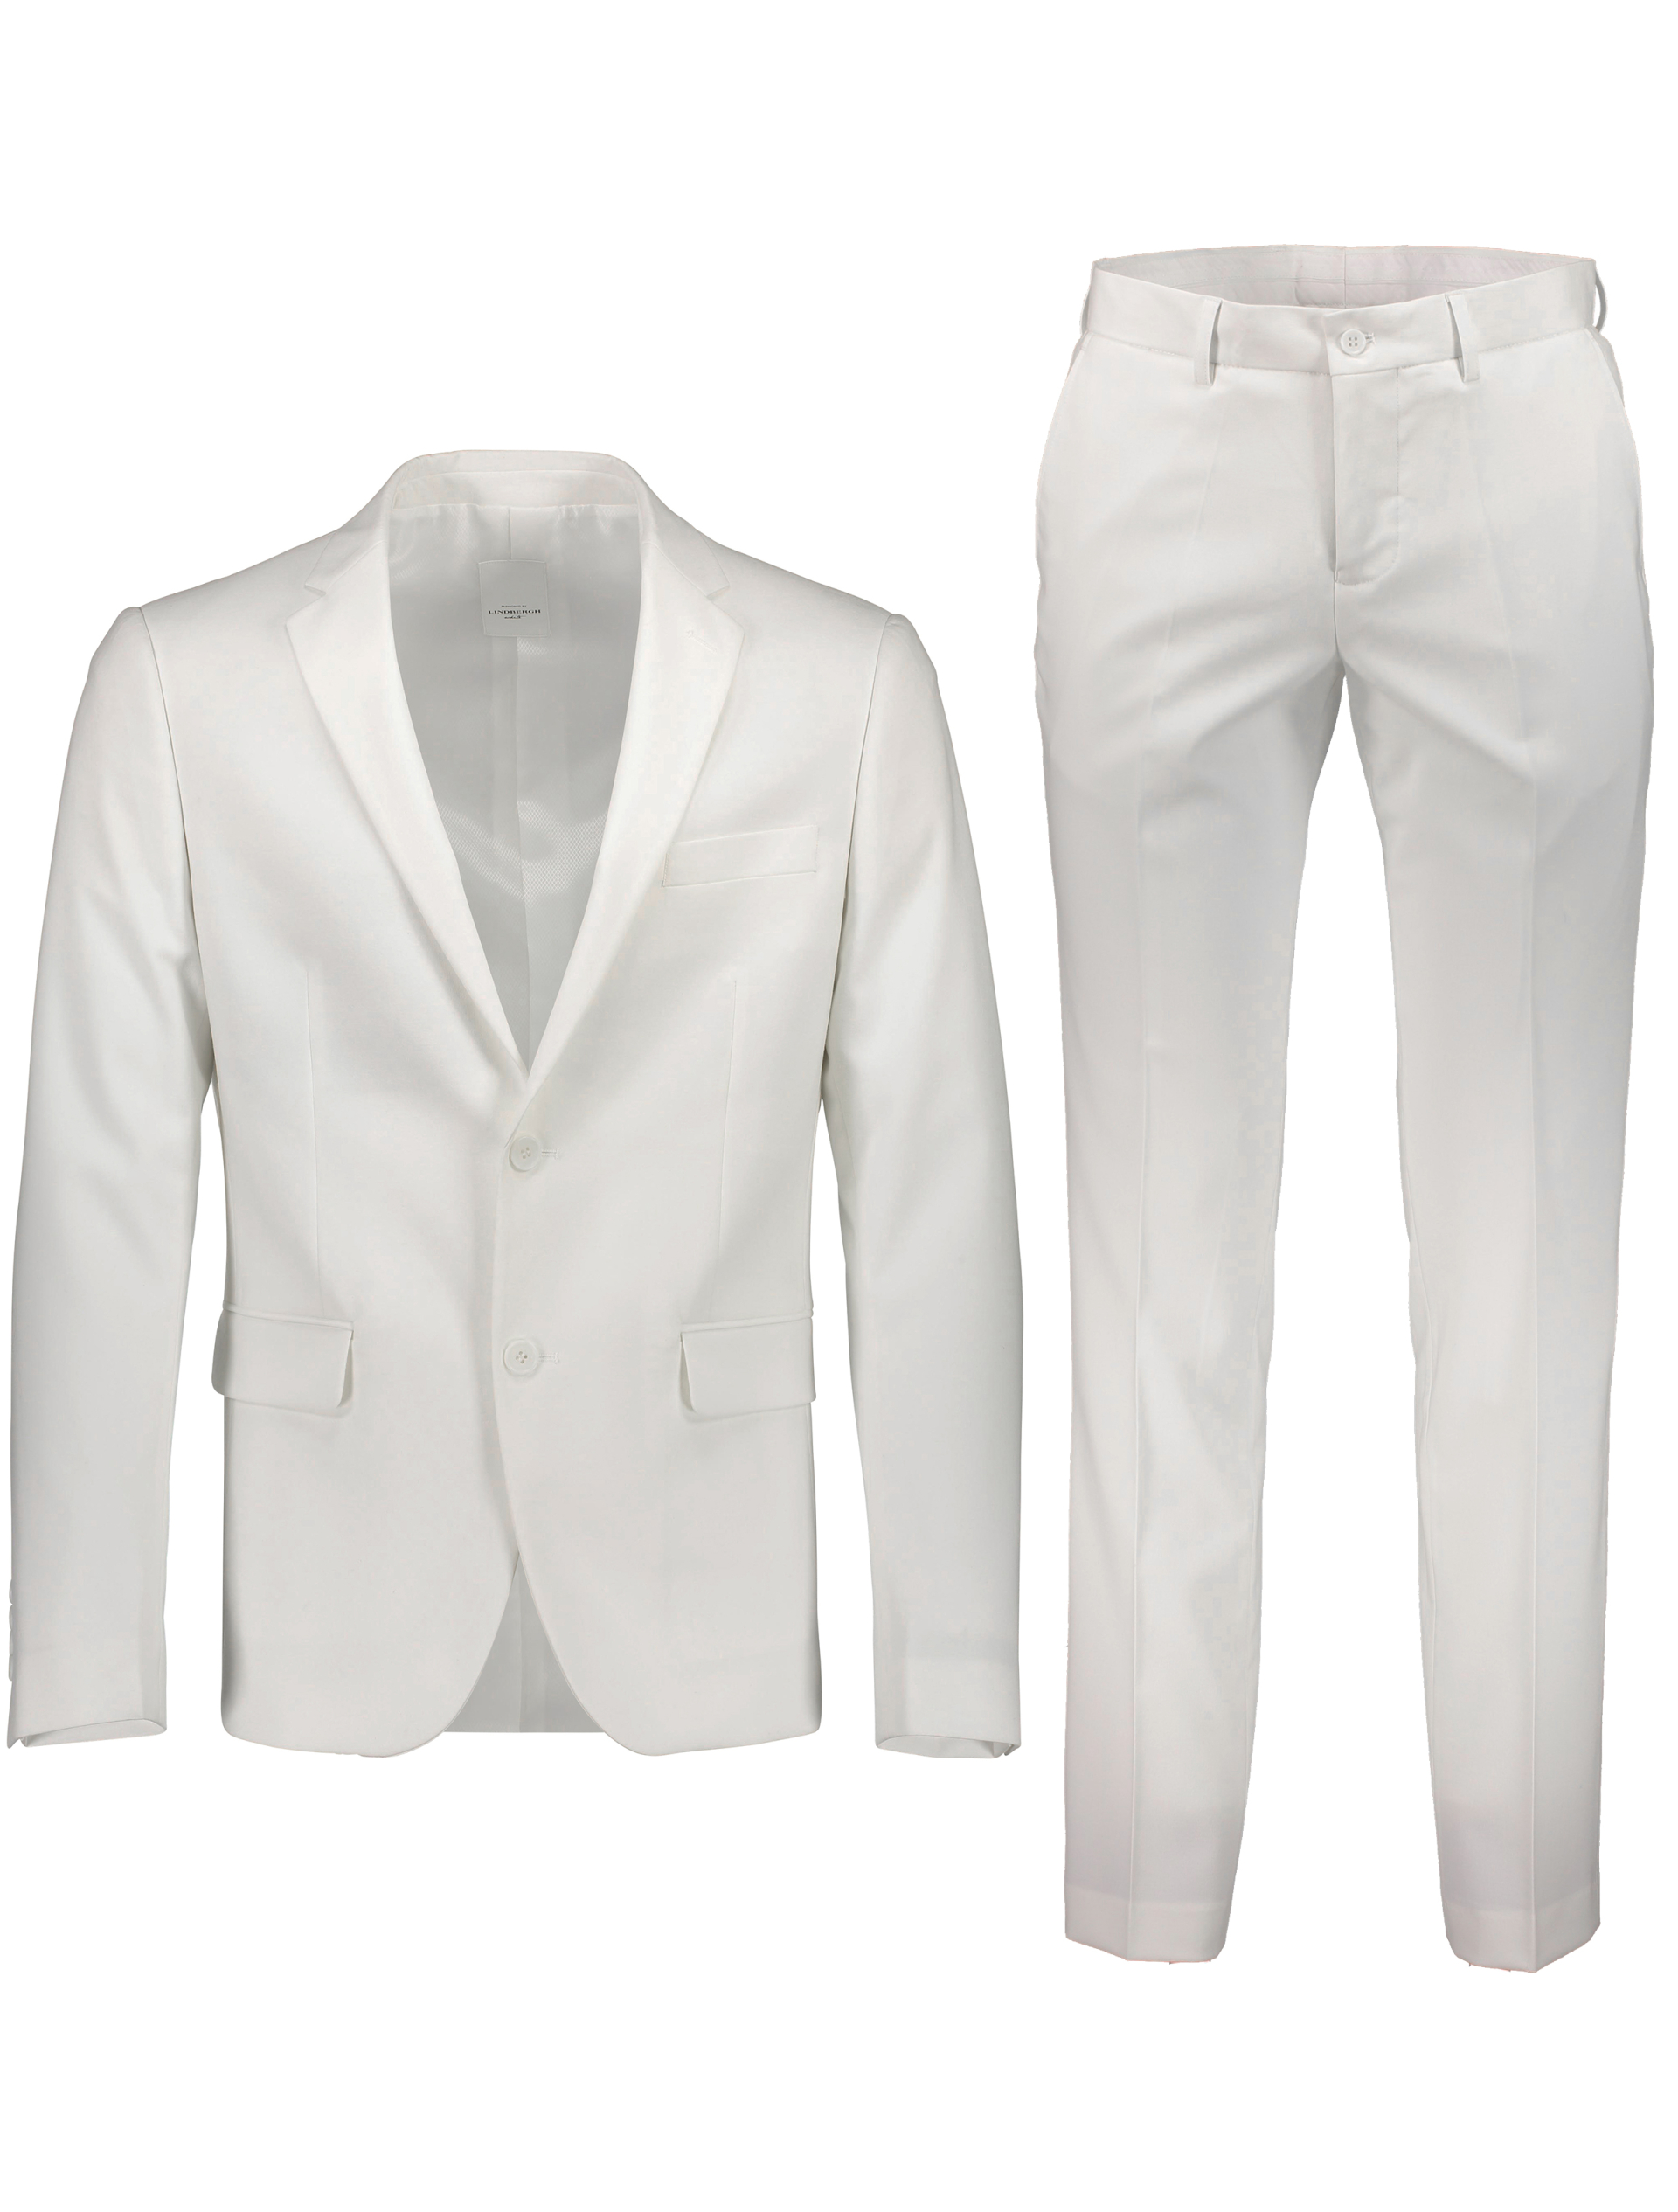 Lindbergh Suit white / white